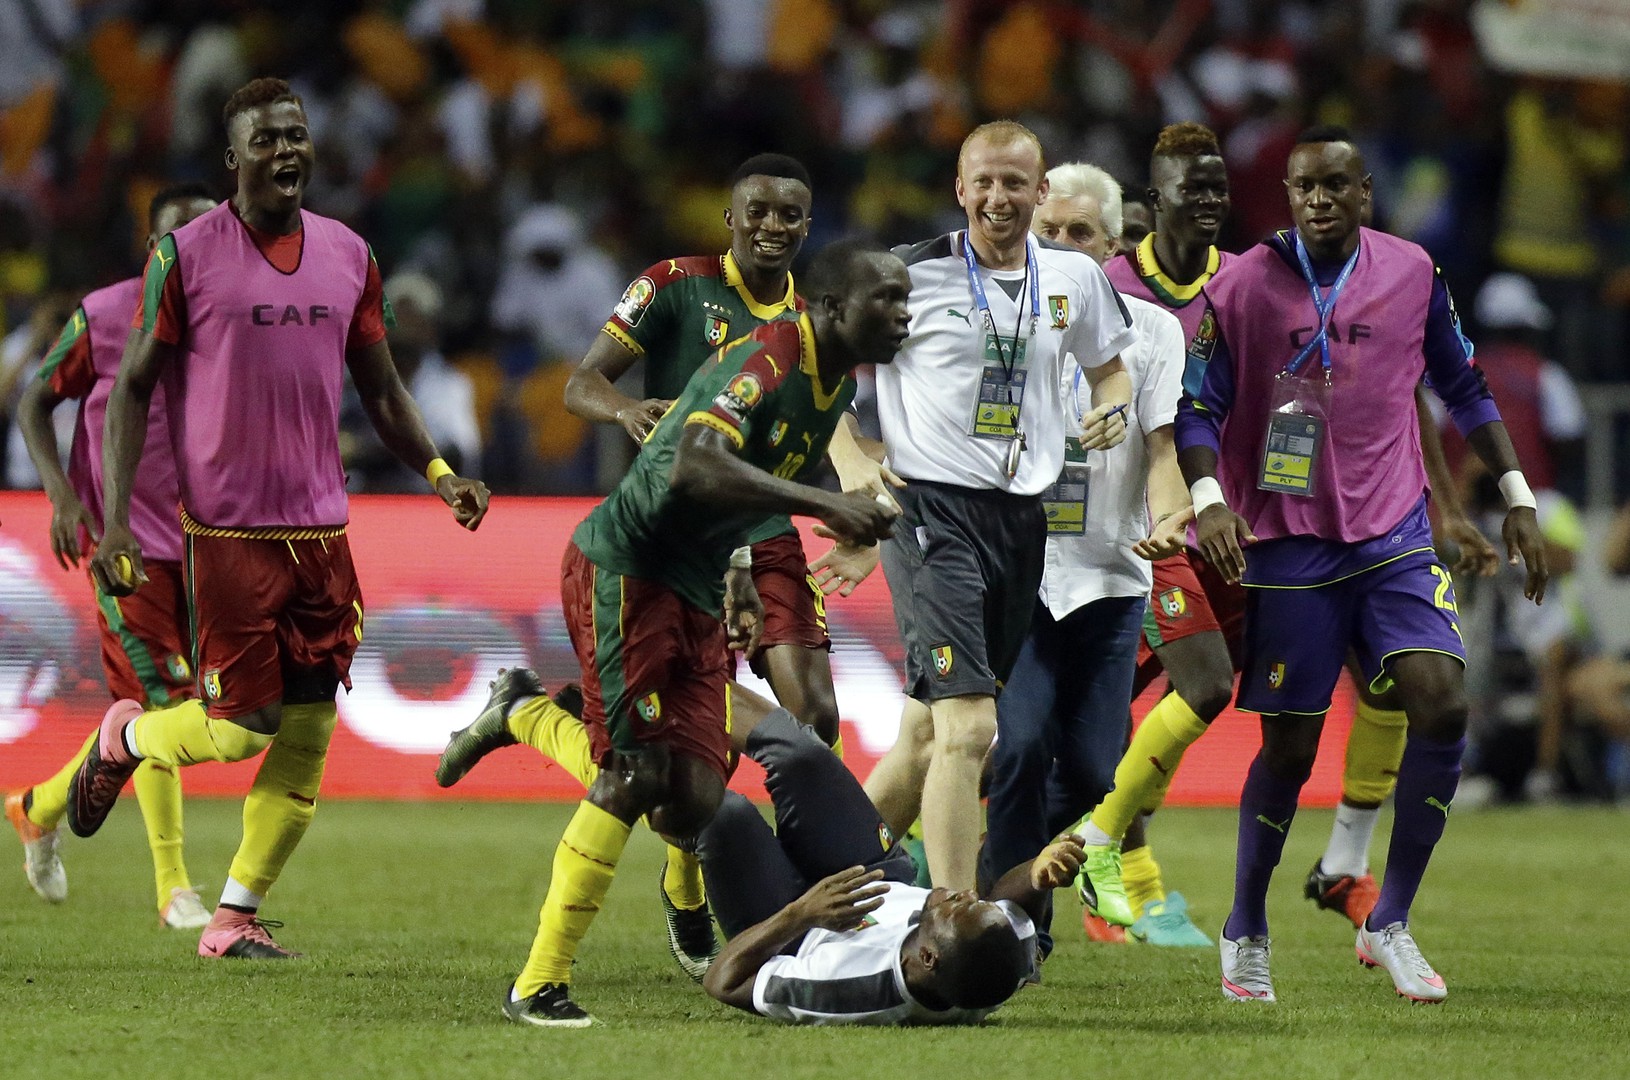 Kamerun zdolal vo finále